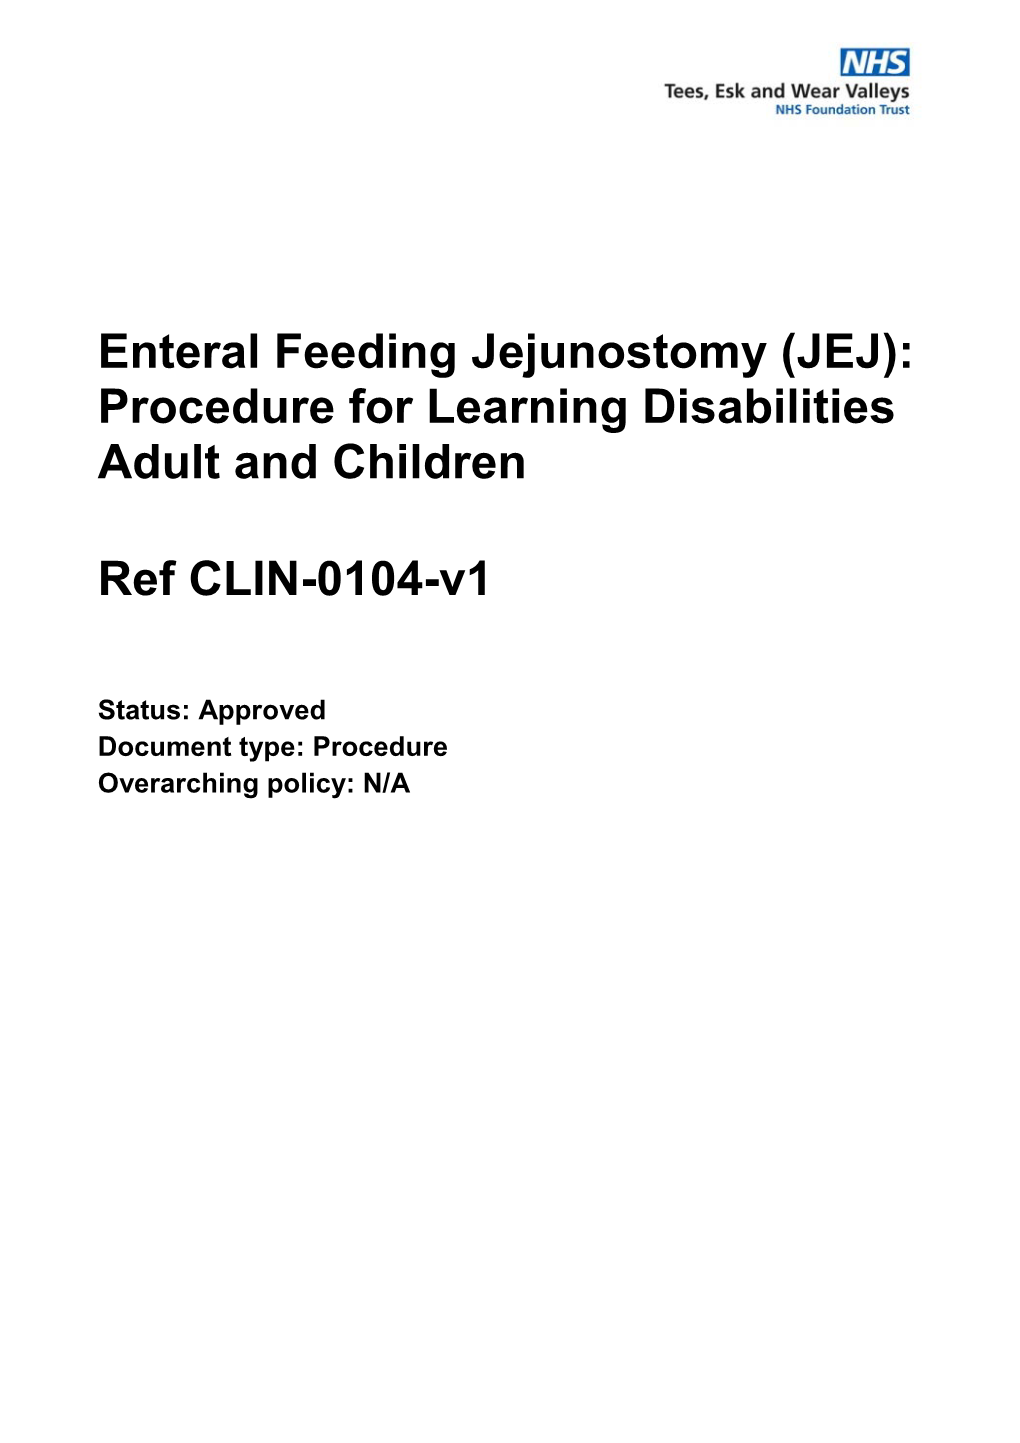 Enteral Feeding Jejunostomy (JEJ) Procedure Last Amended: 30 October 2020